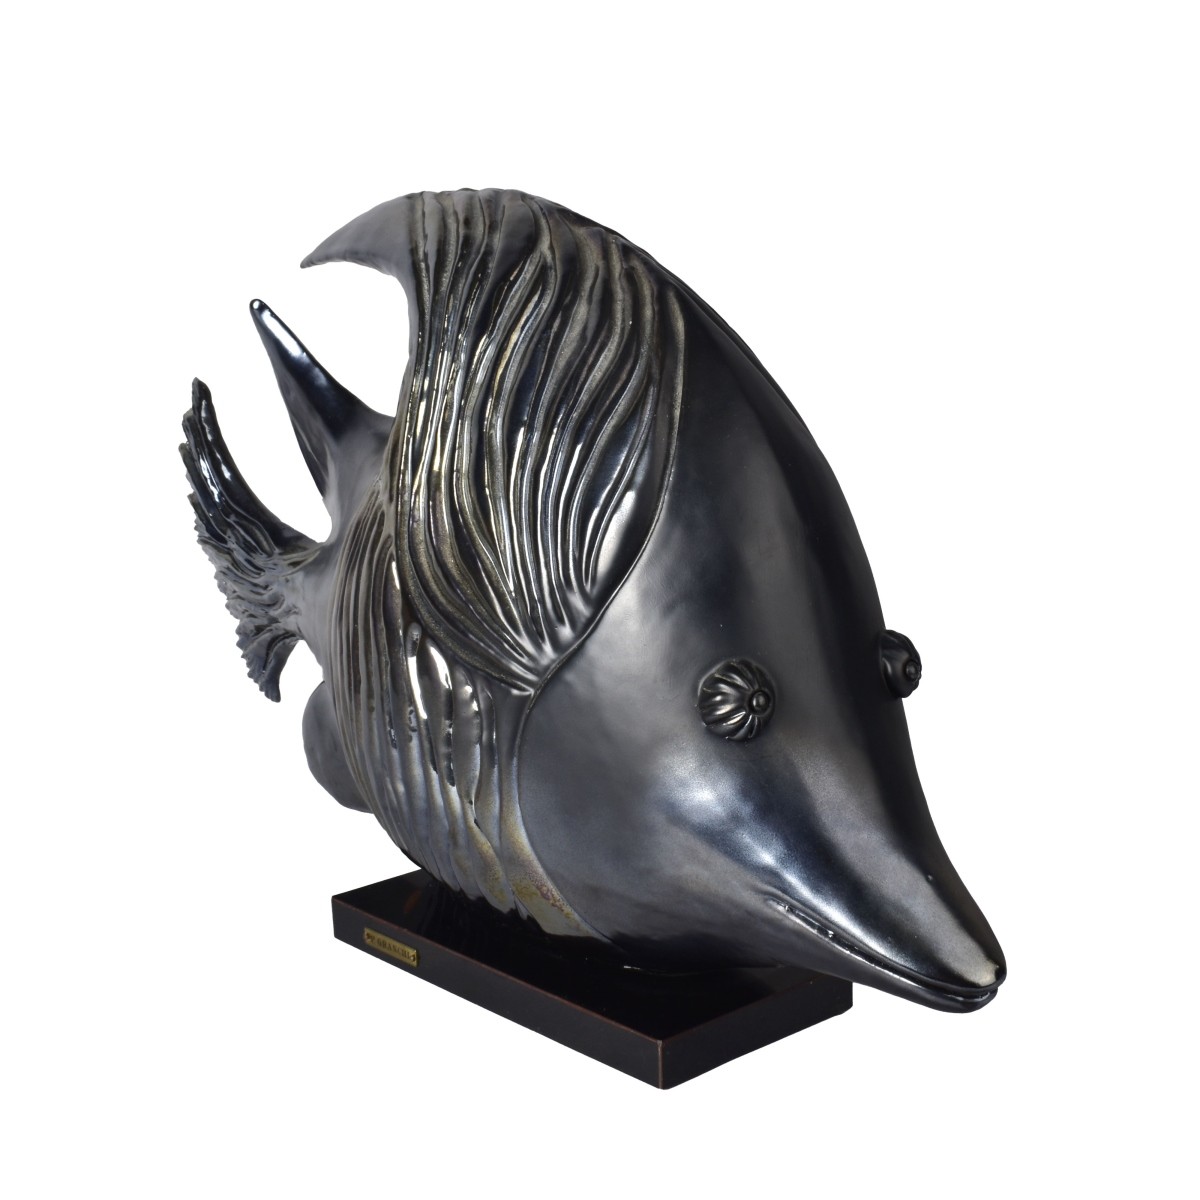 Large Italian Ceramic Fish Sculpture by P. Granchi